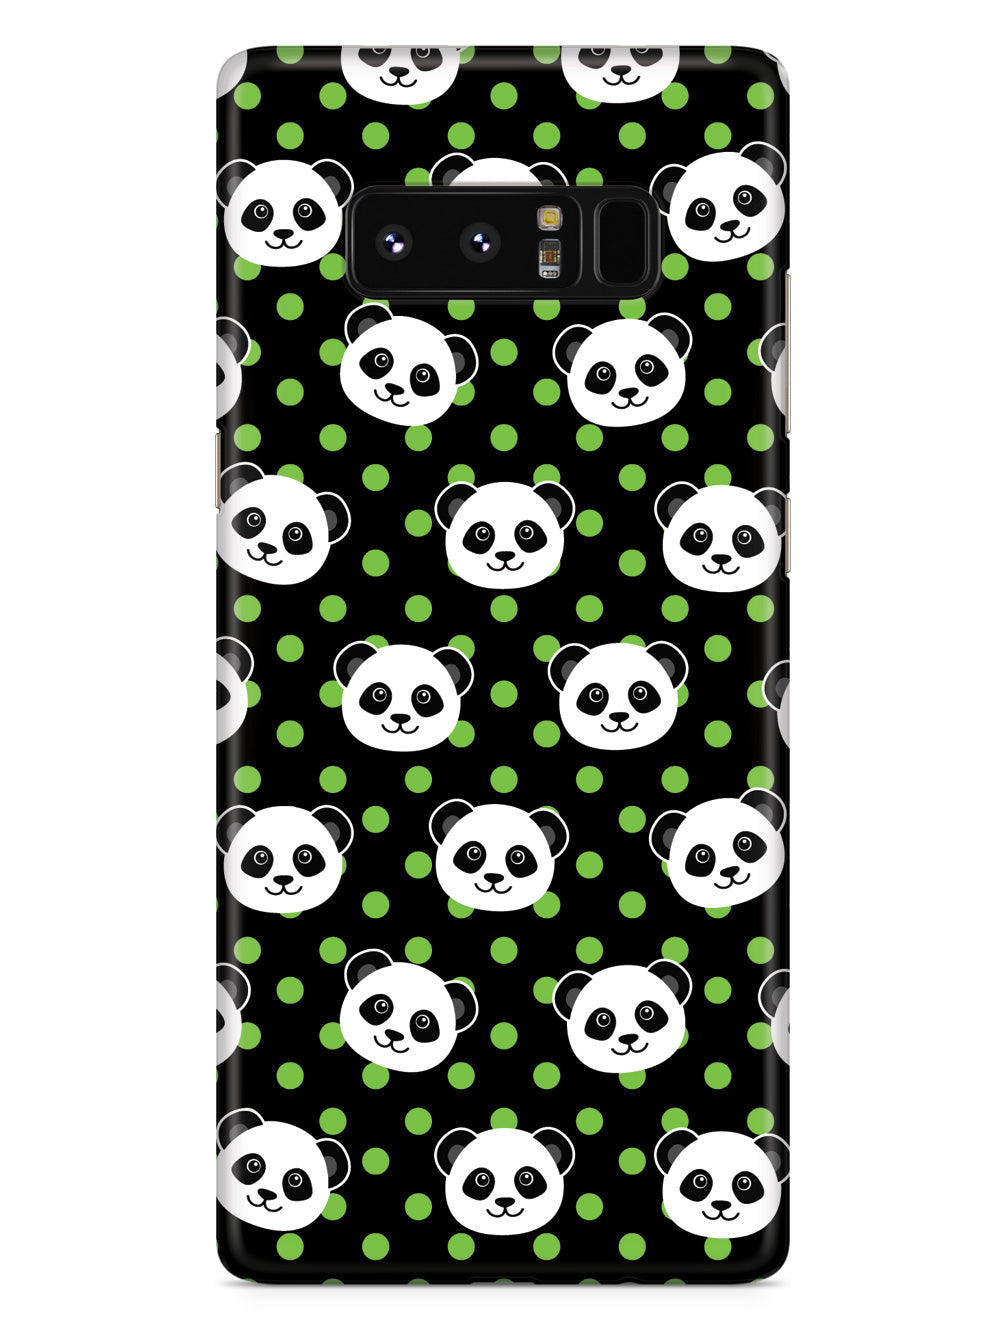 Cute Panda Pattern - Green Polka Dots - Black Case